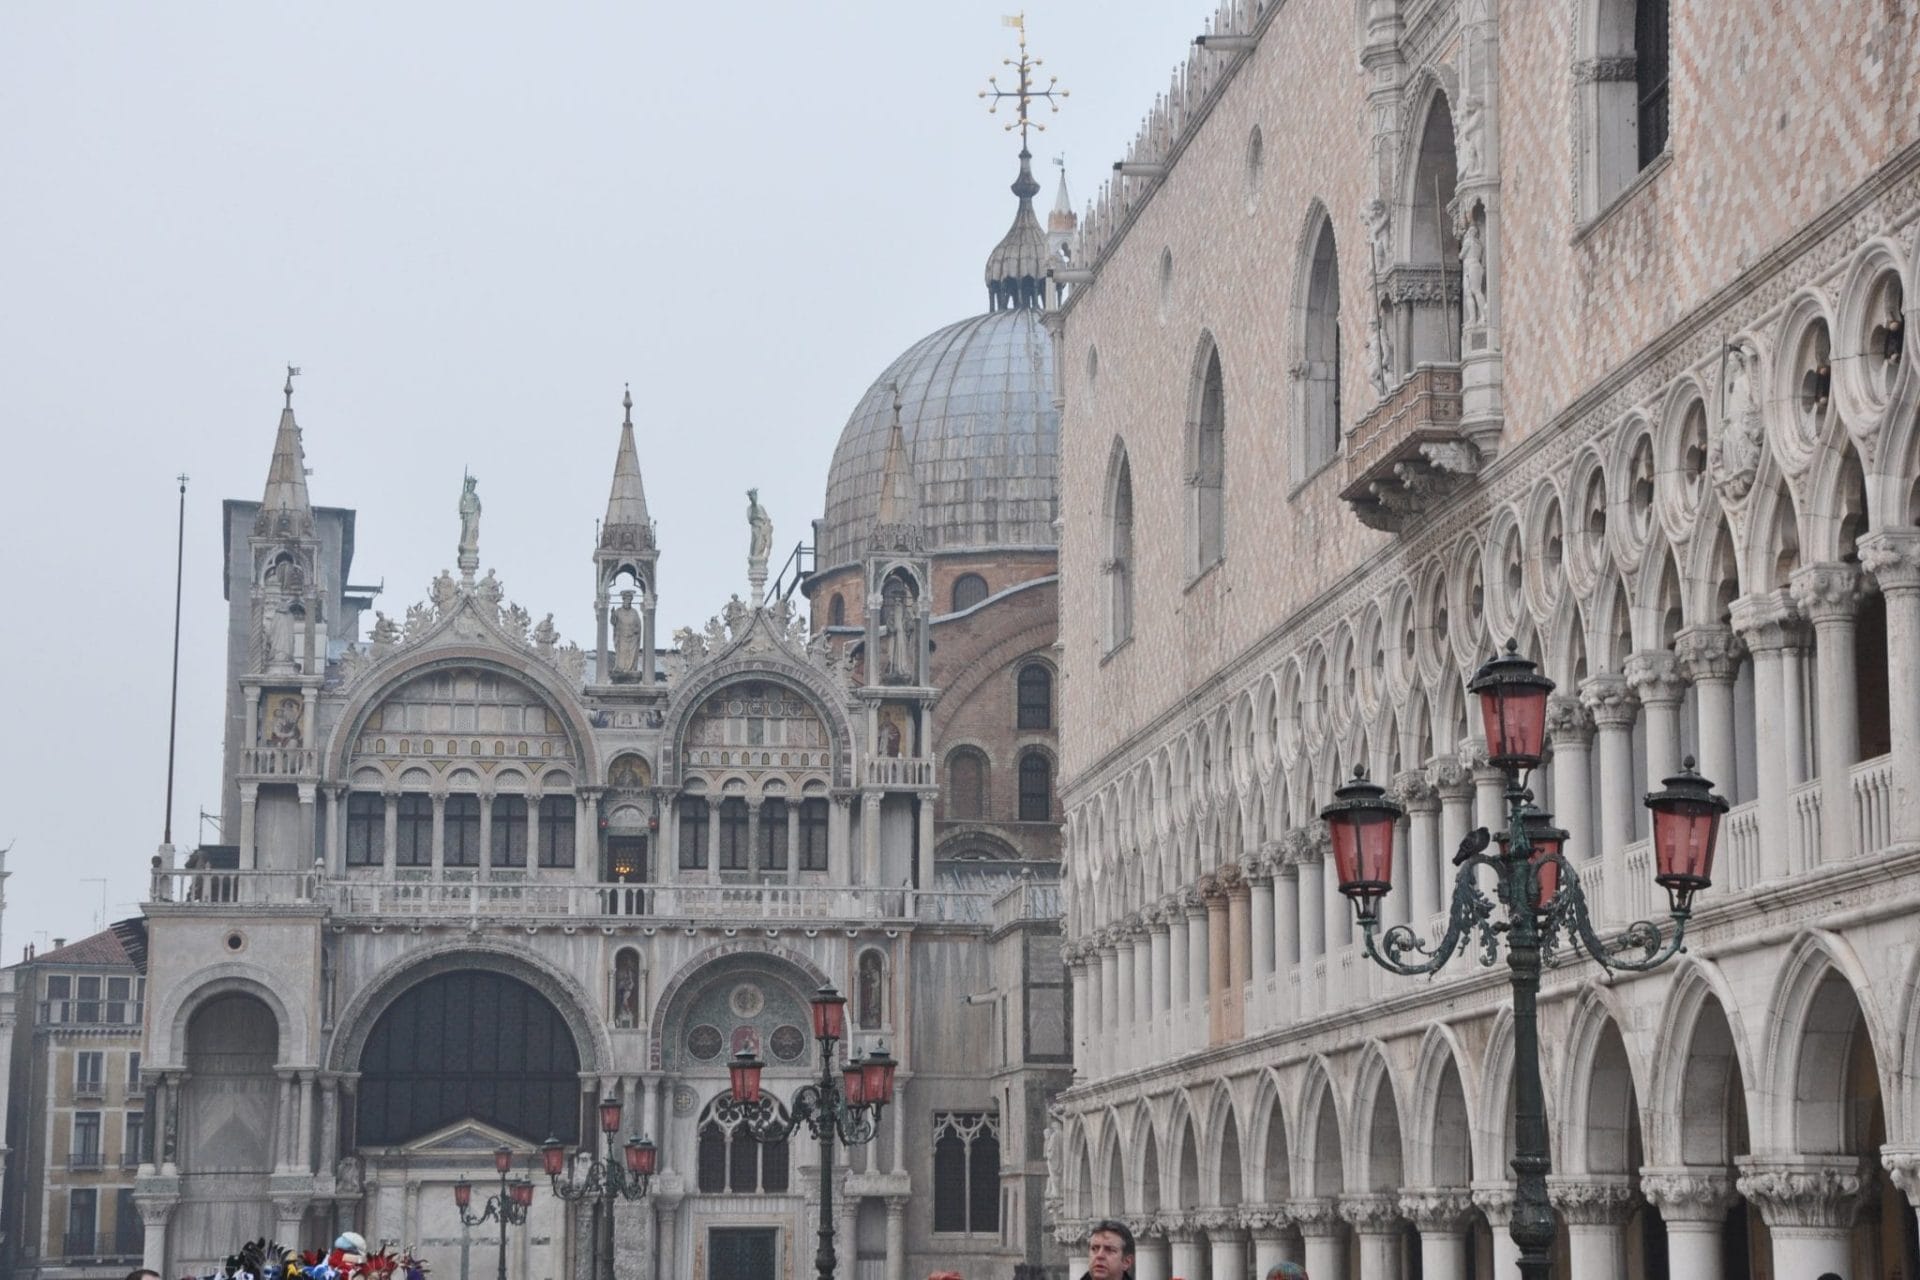 St. Mark's Square, the heart of the Venetian neighborhood of San Marco.